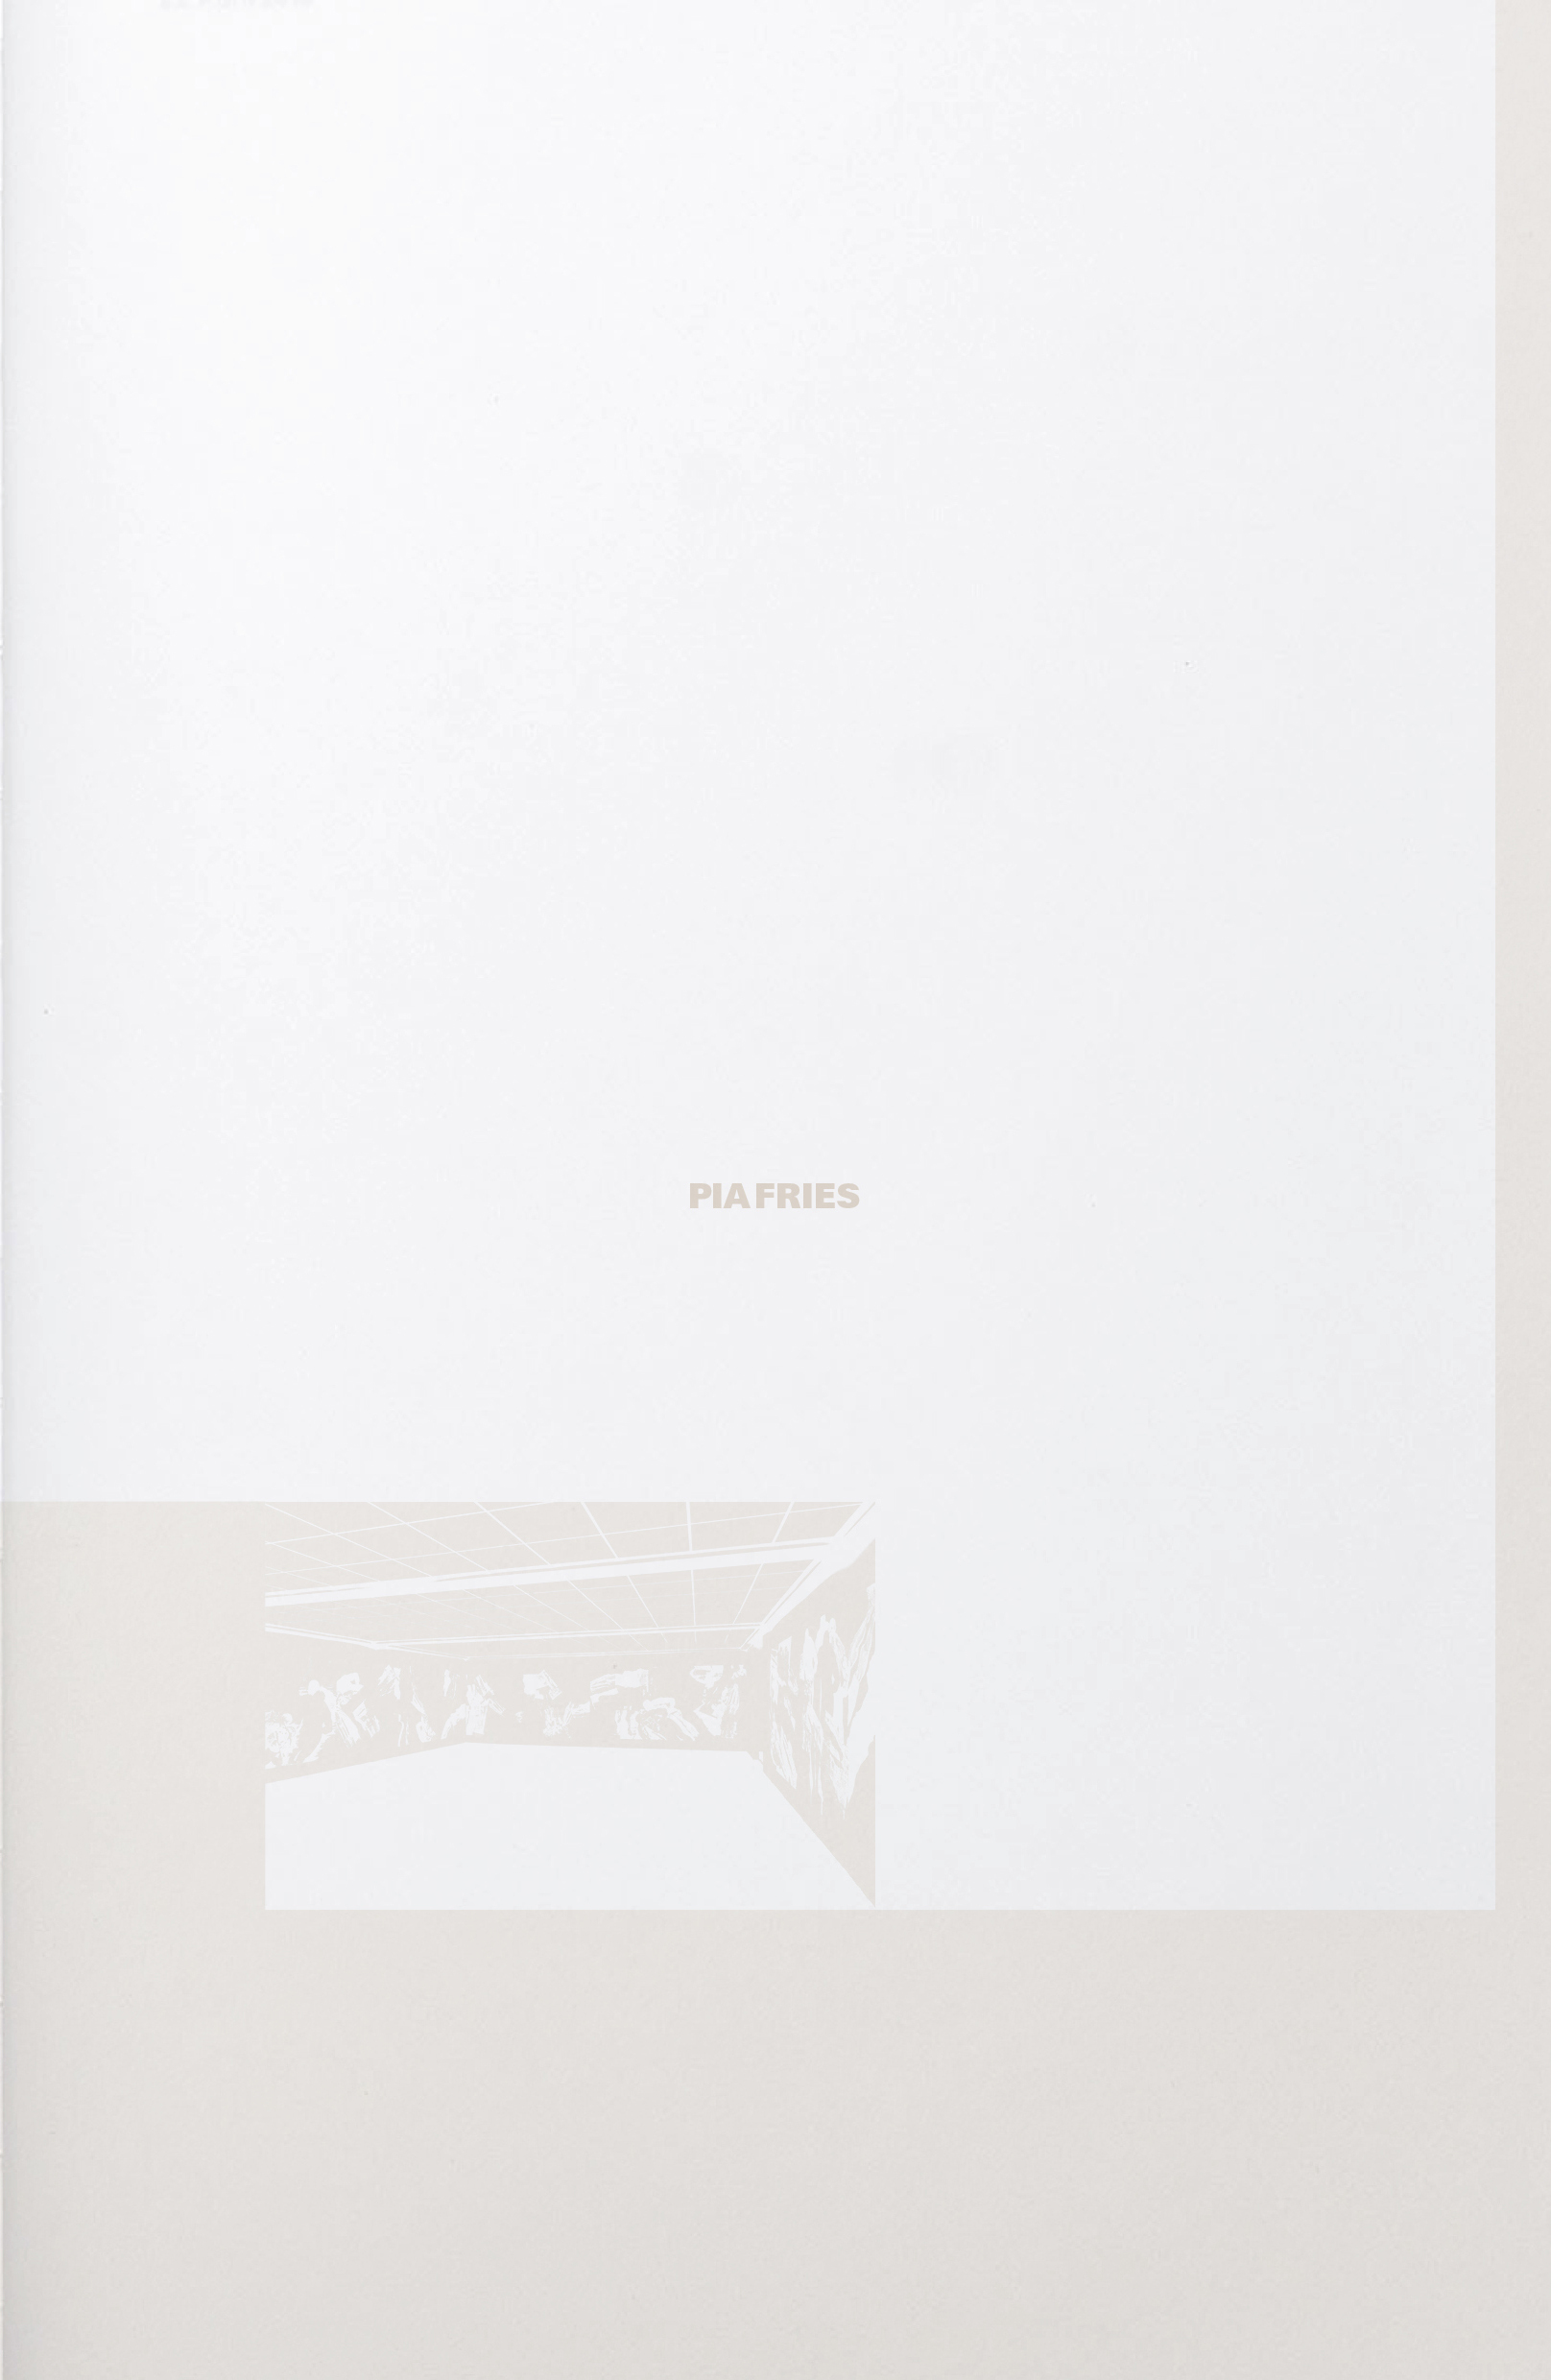 230503 Pia Fries Katalog Umschlag NEWSLETTER